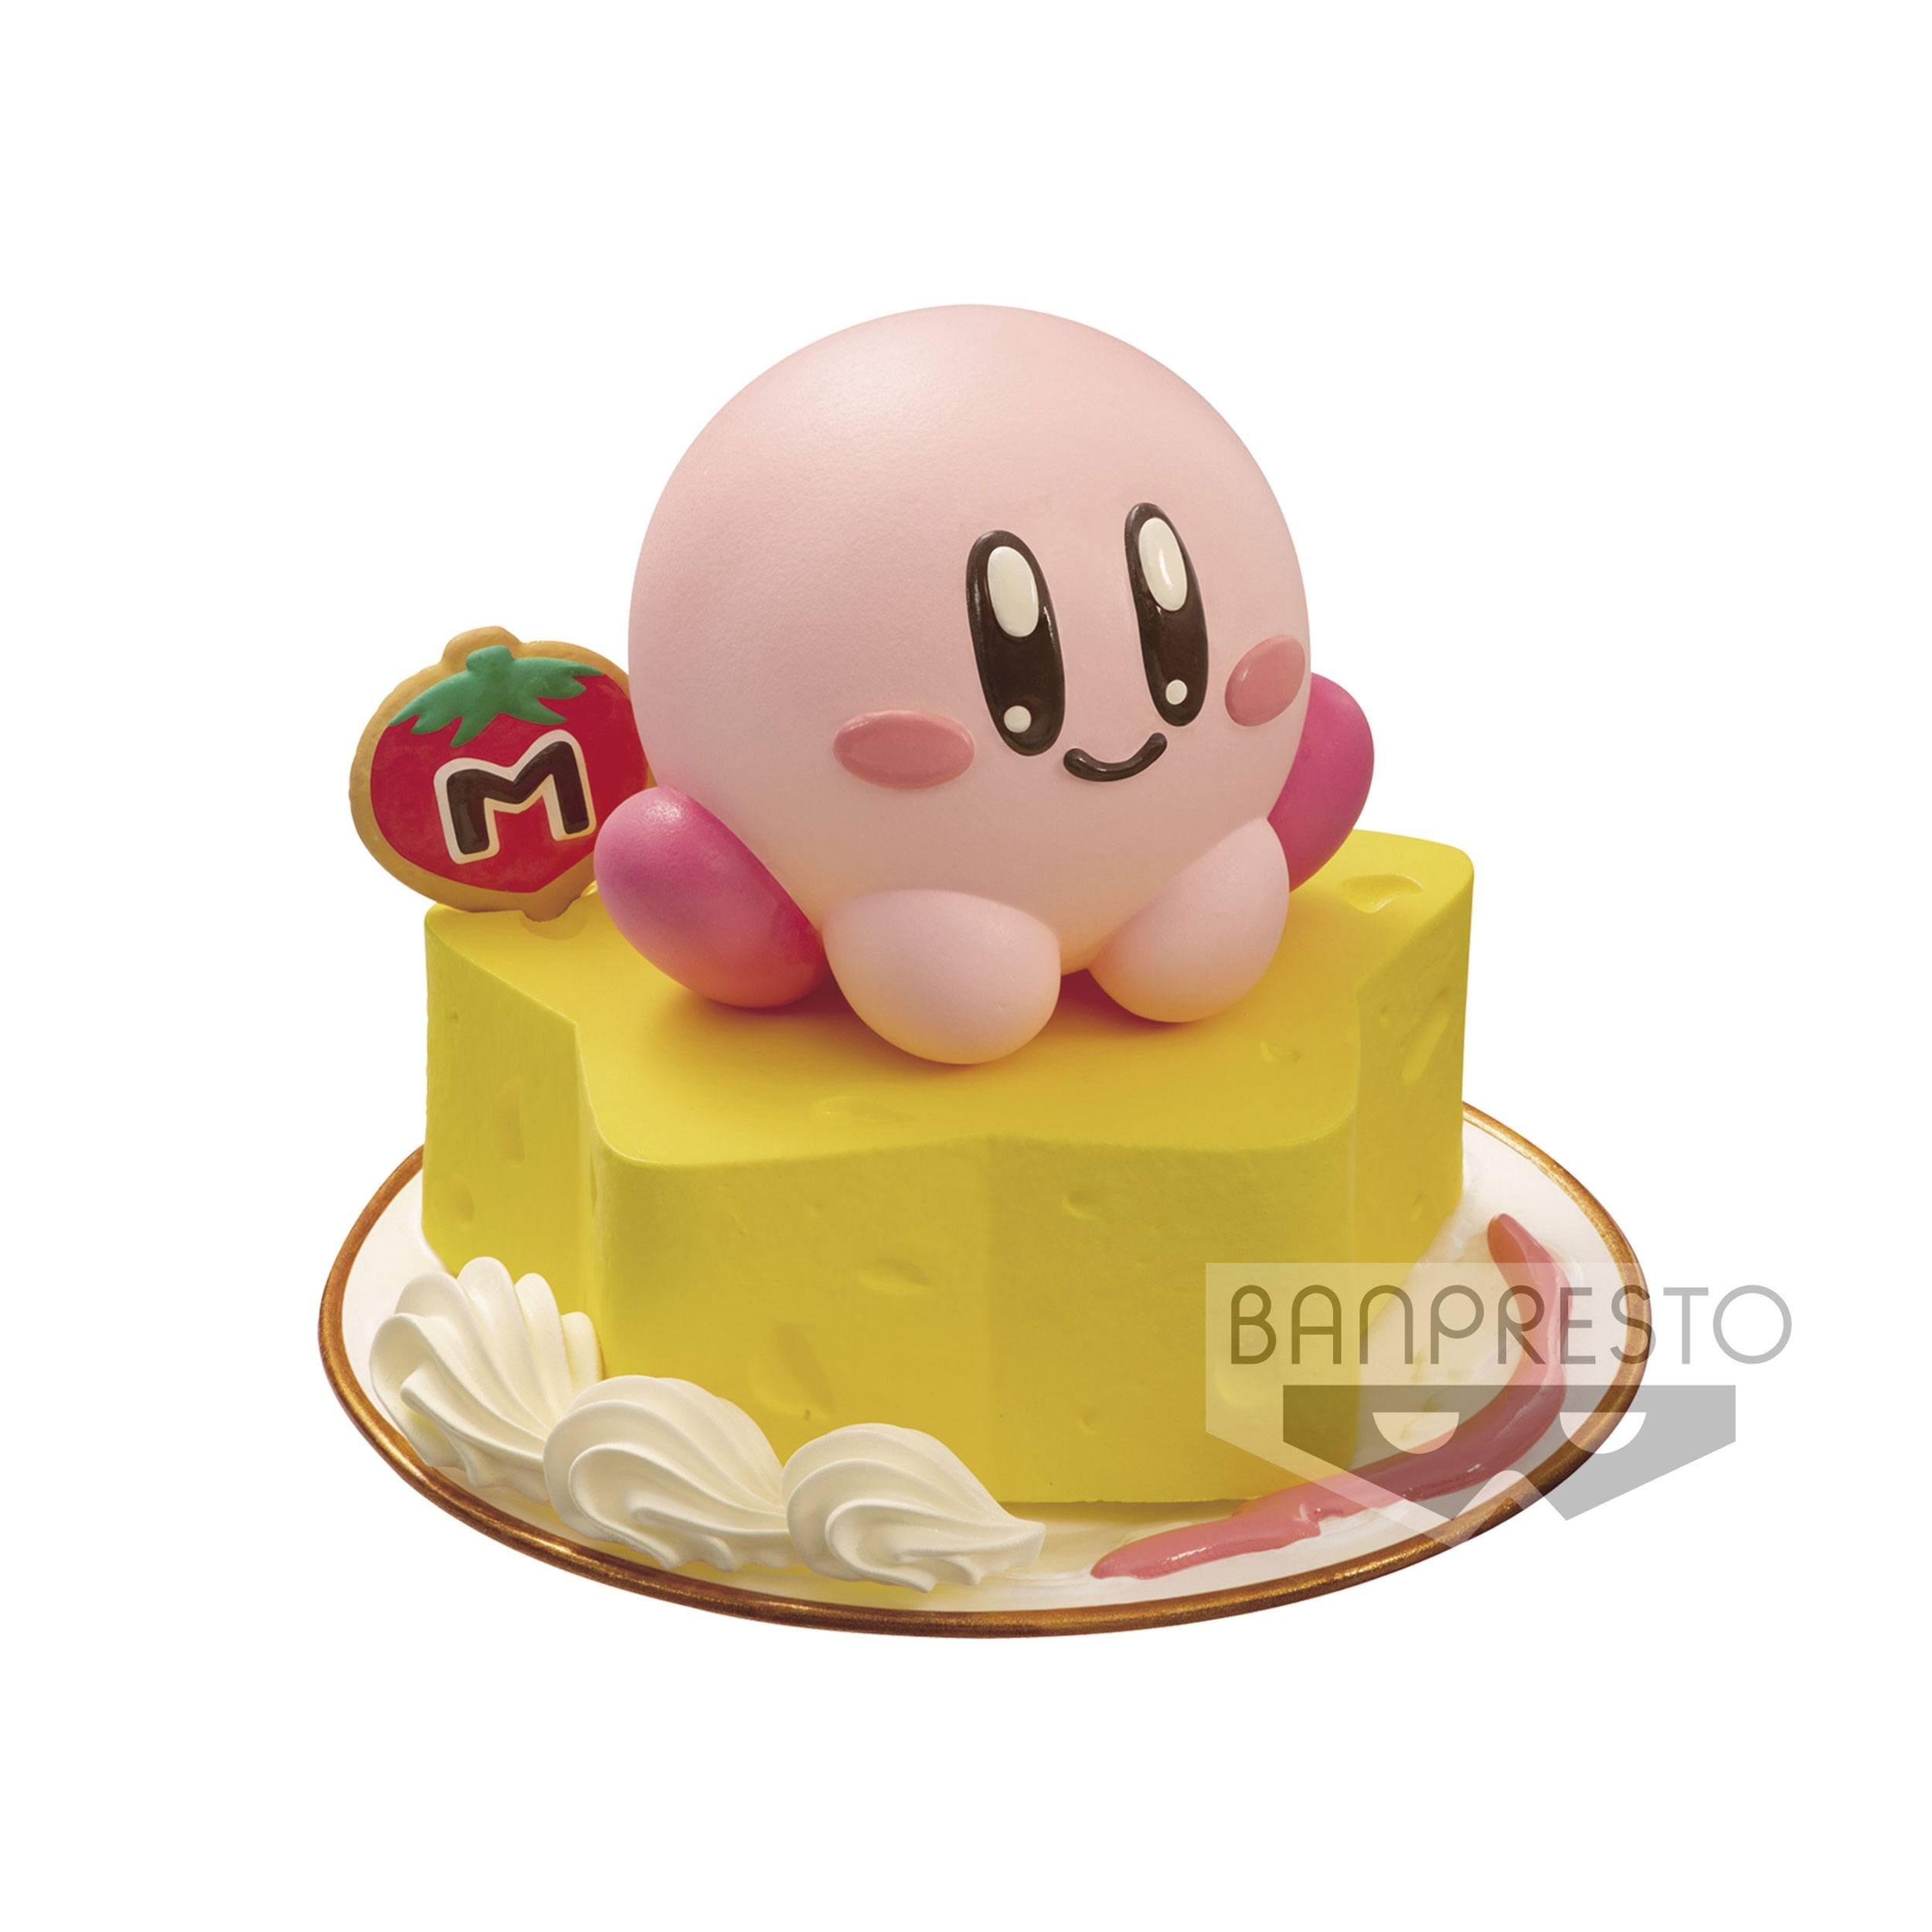 Banpresto  Statische Figur - Paldolce Collection - Kirby - Kirby with Star Cake 